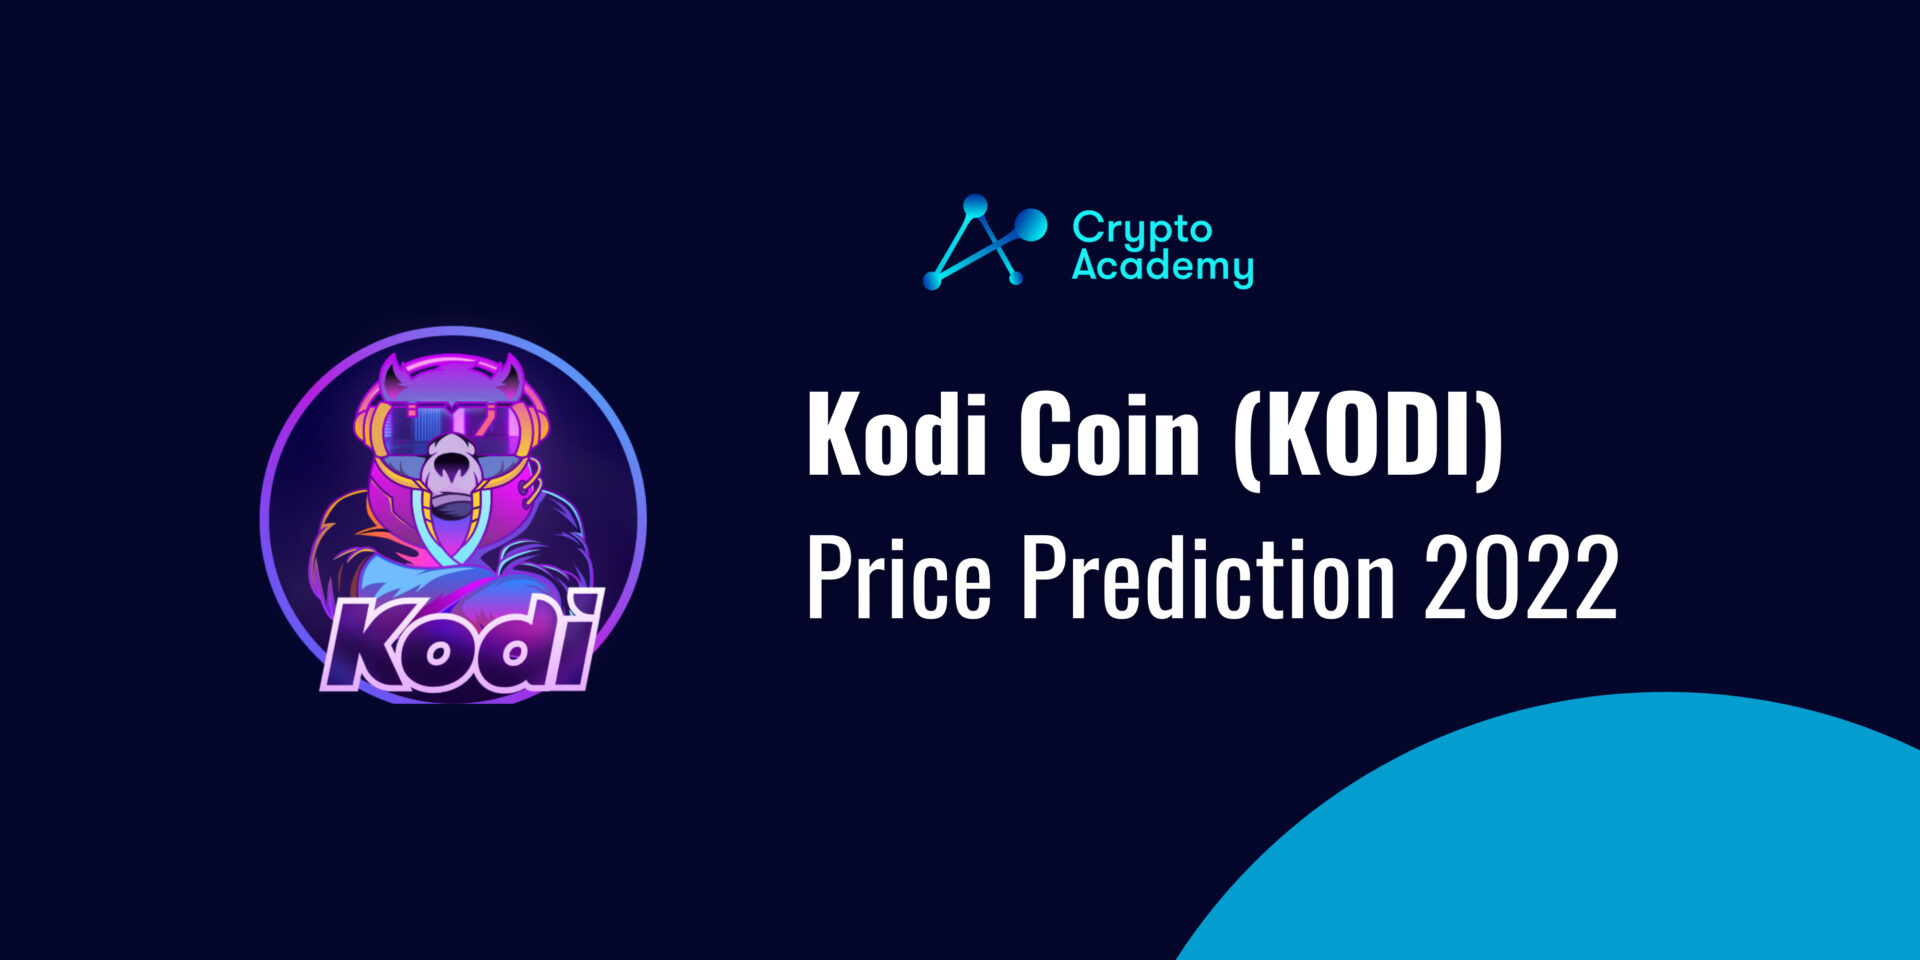 Kodi Coin Price Prediction 2022 and Beyond – Will KODI Potentially Reach $1?